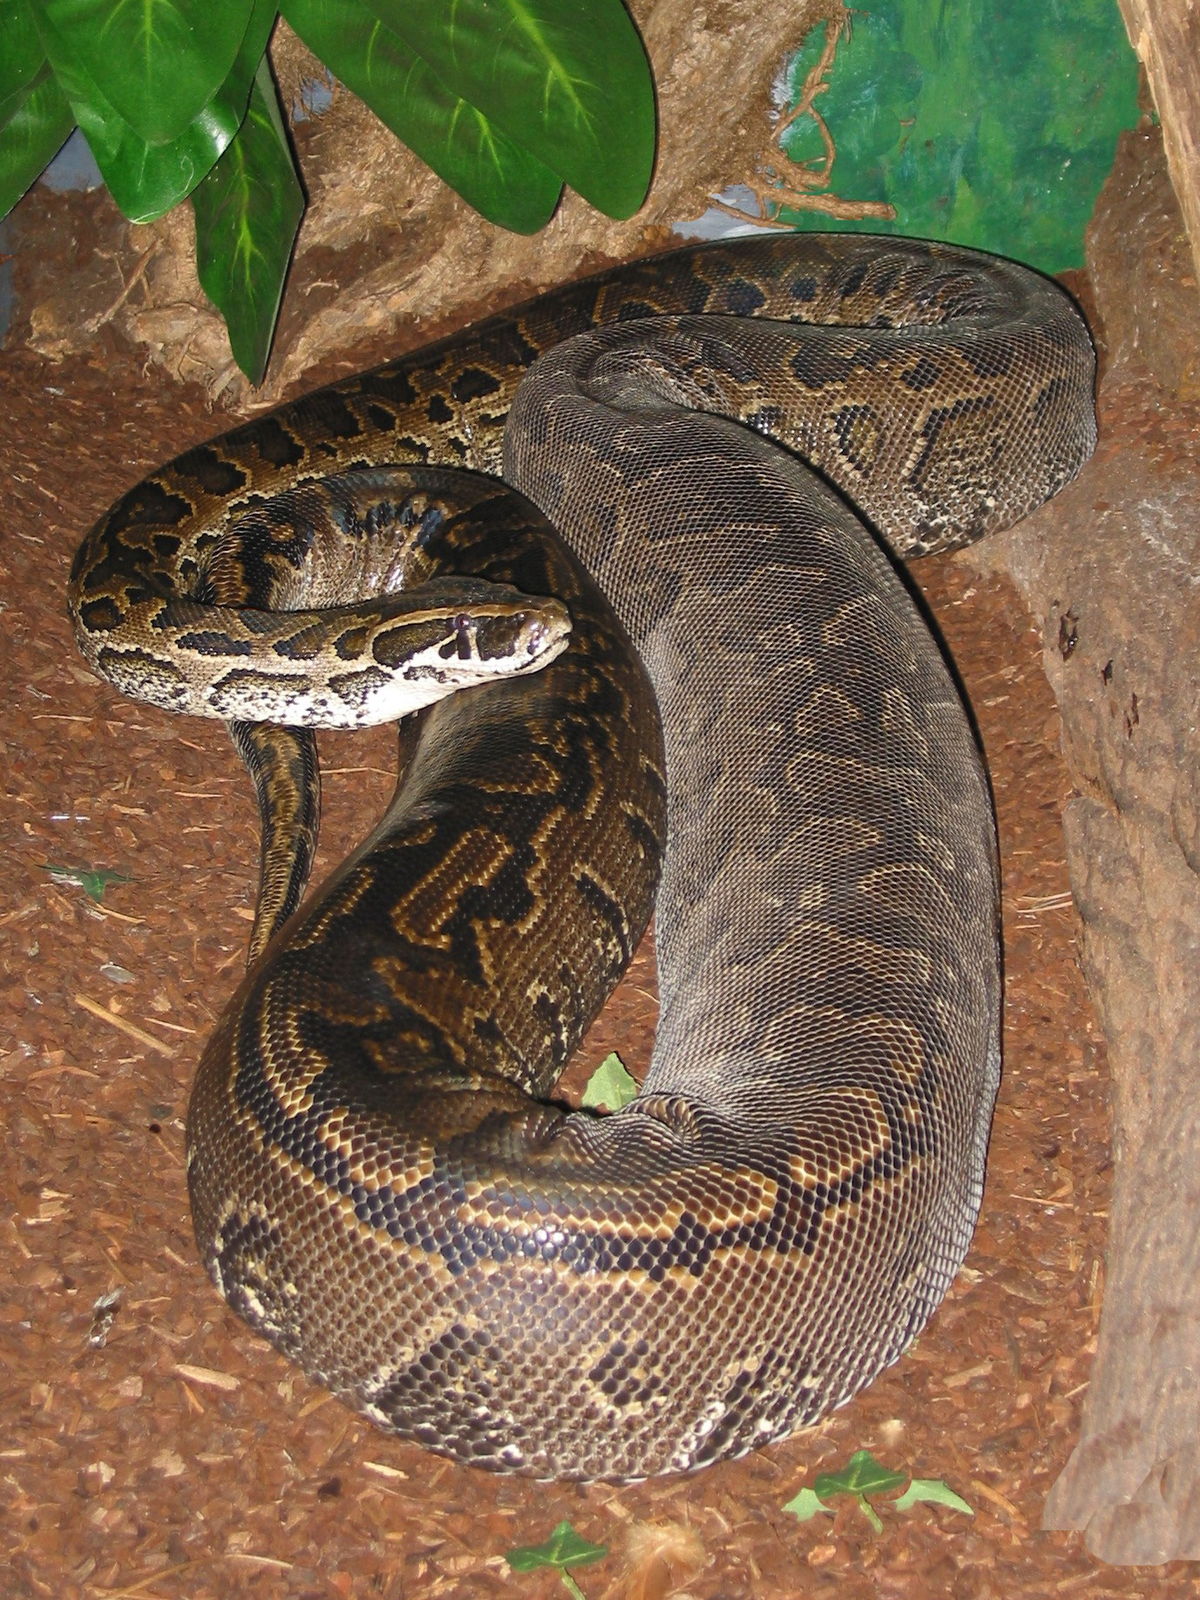 How big can a rock python get?